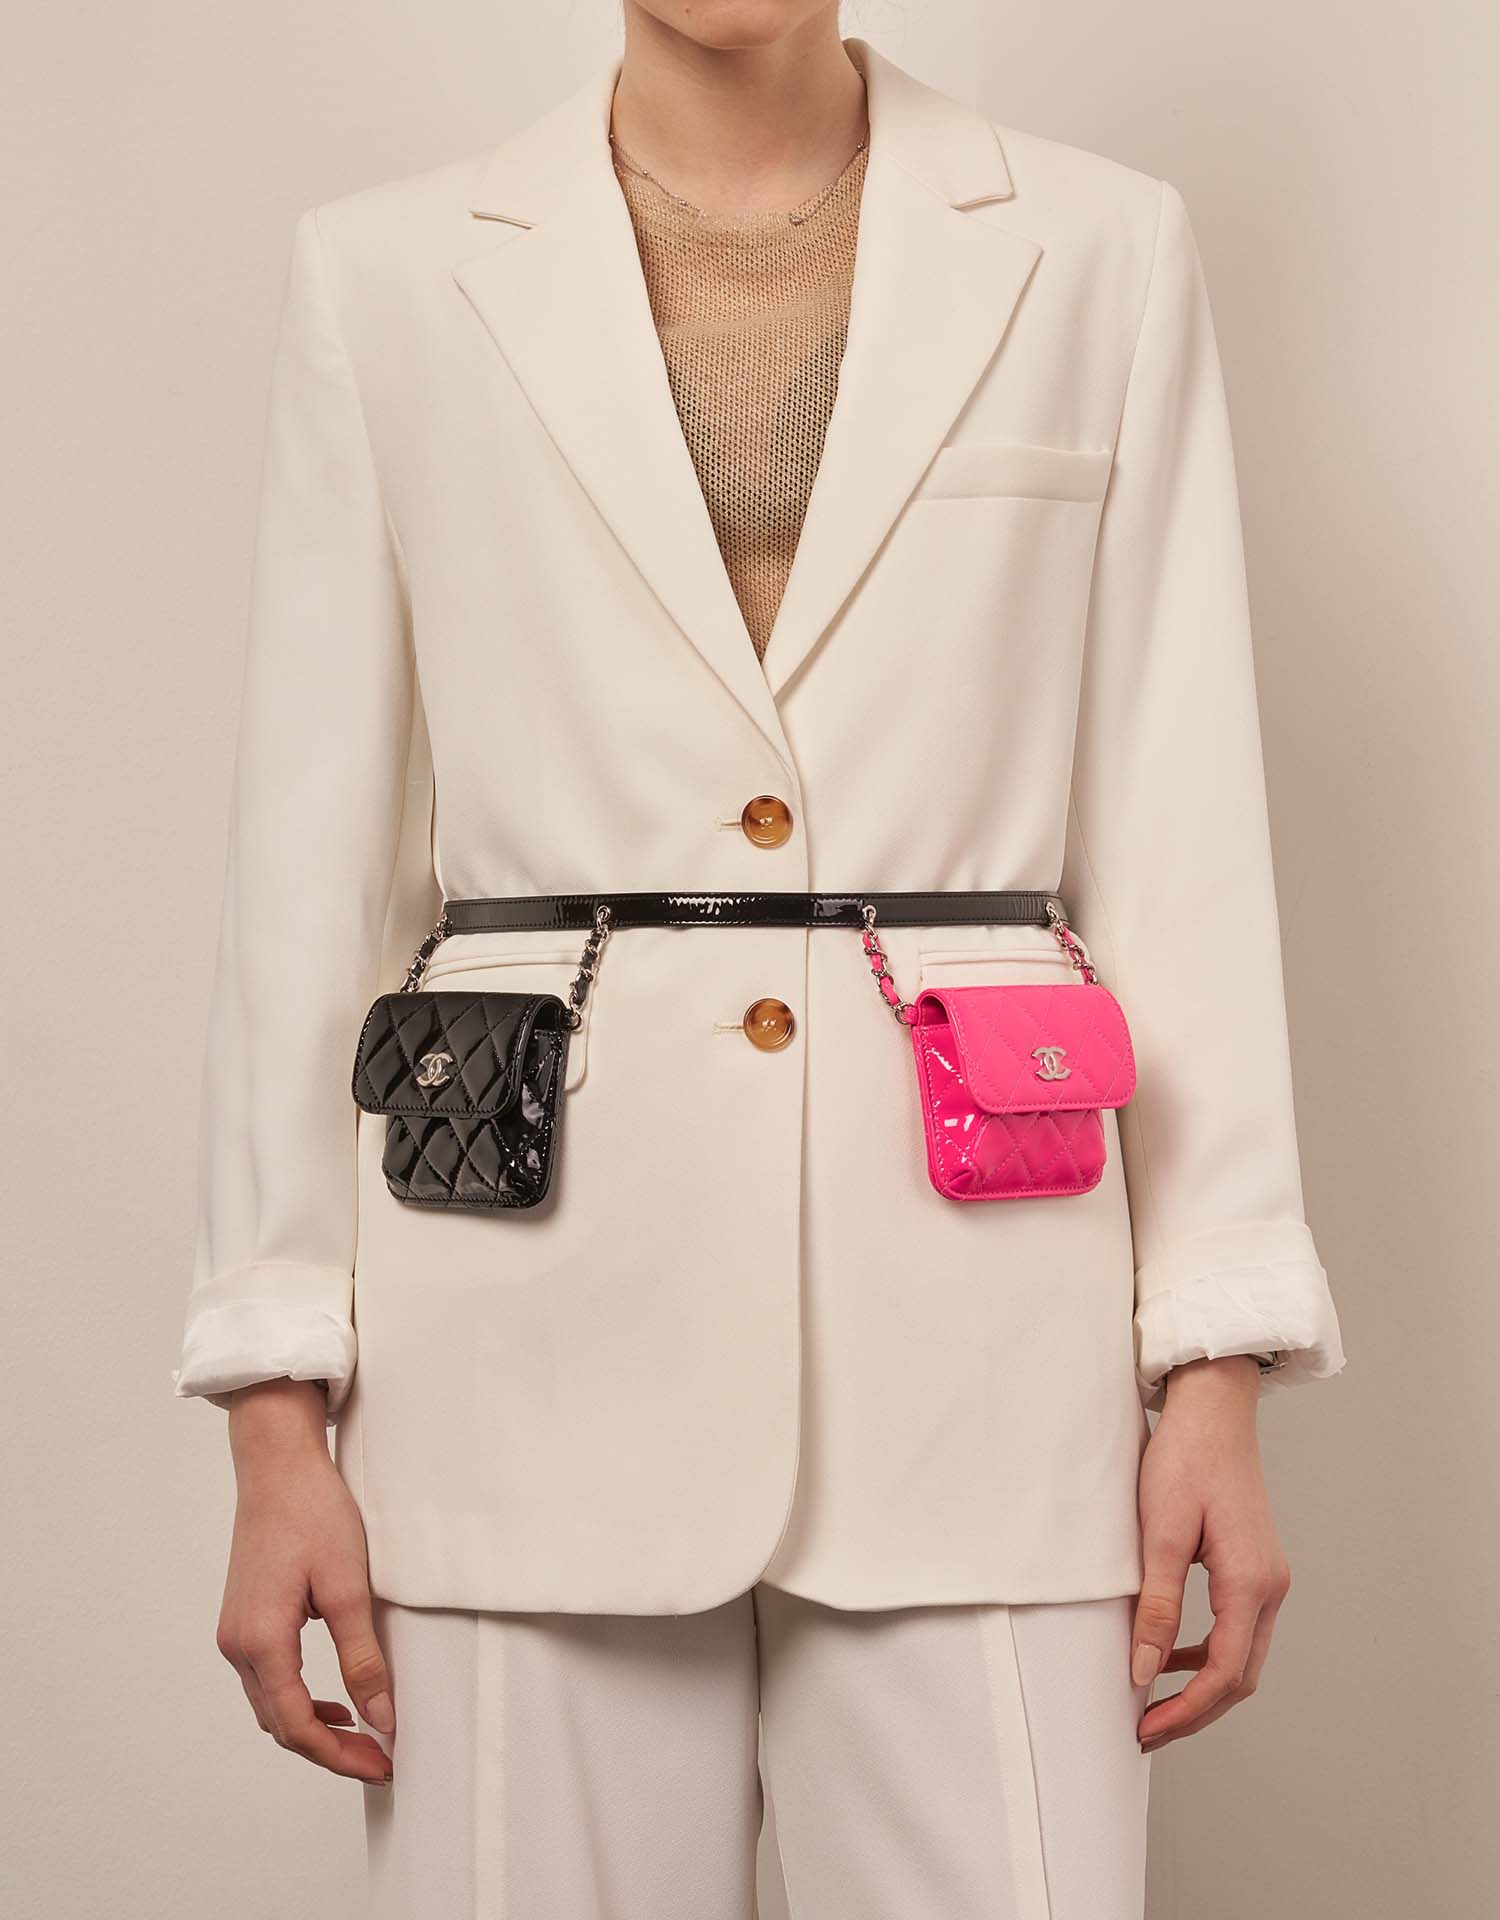 Chanel Double Waist Bag Patent Pink / Black | Saclàb